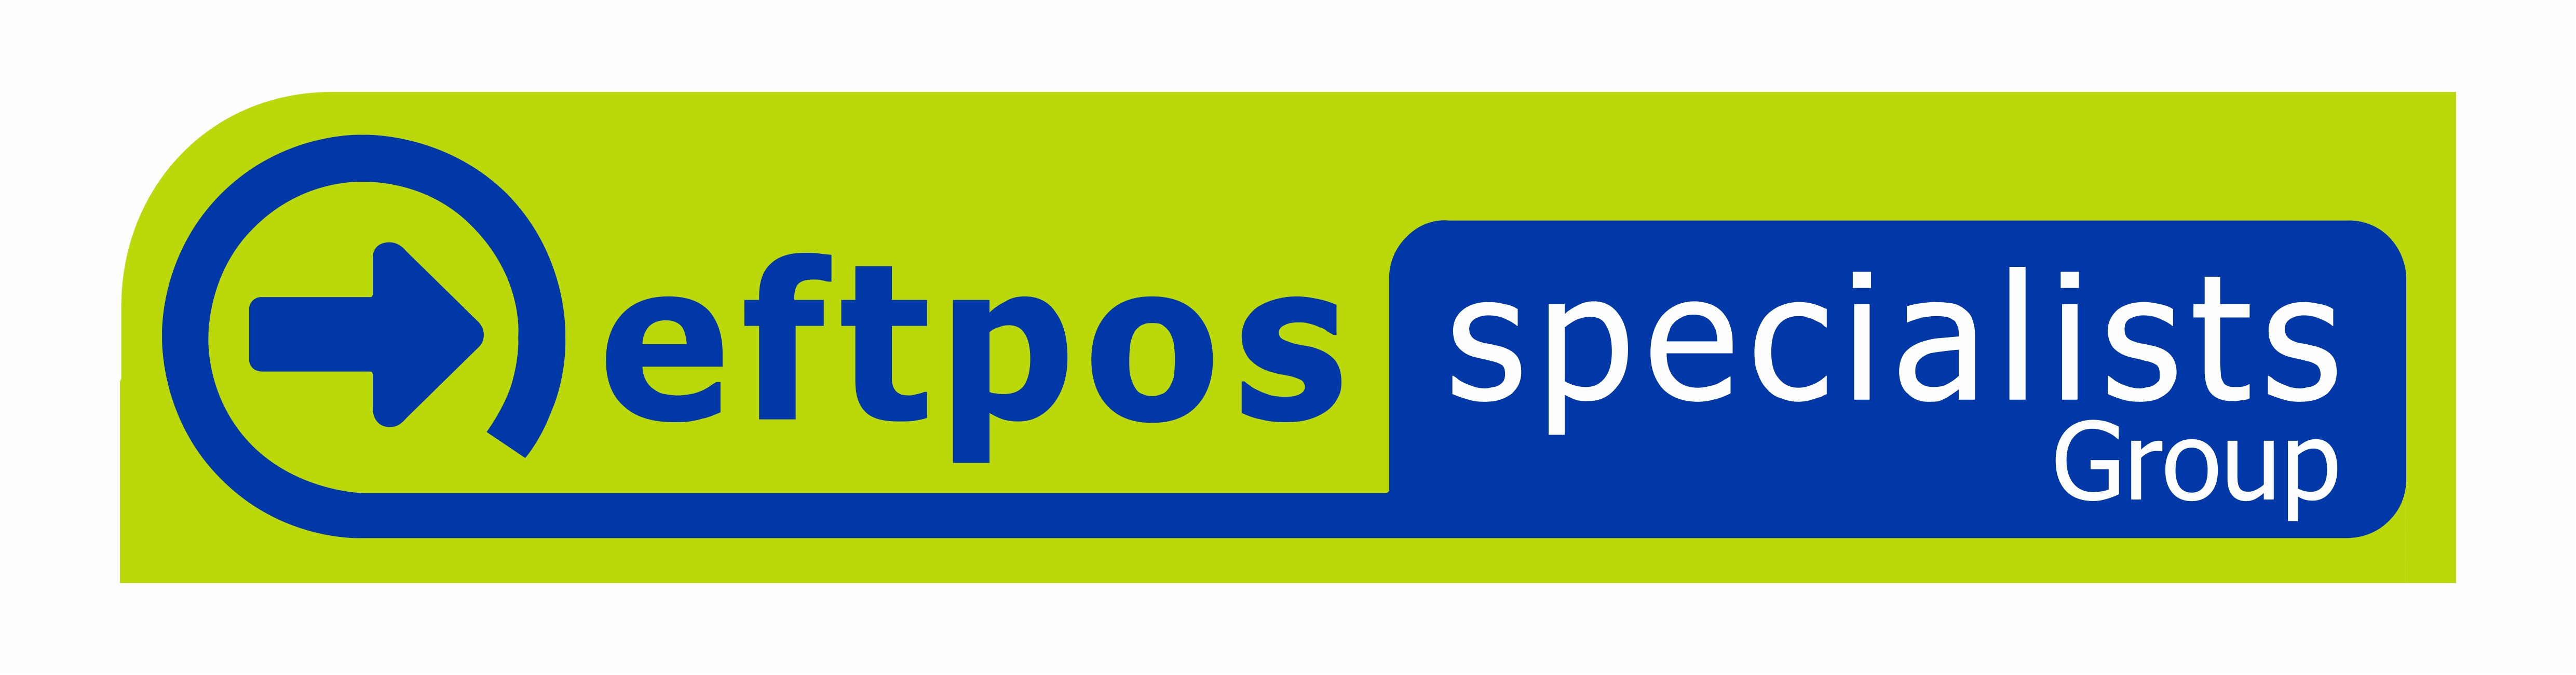 Eftpos Specialists Group logo 2013